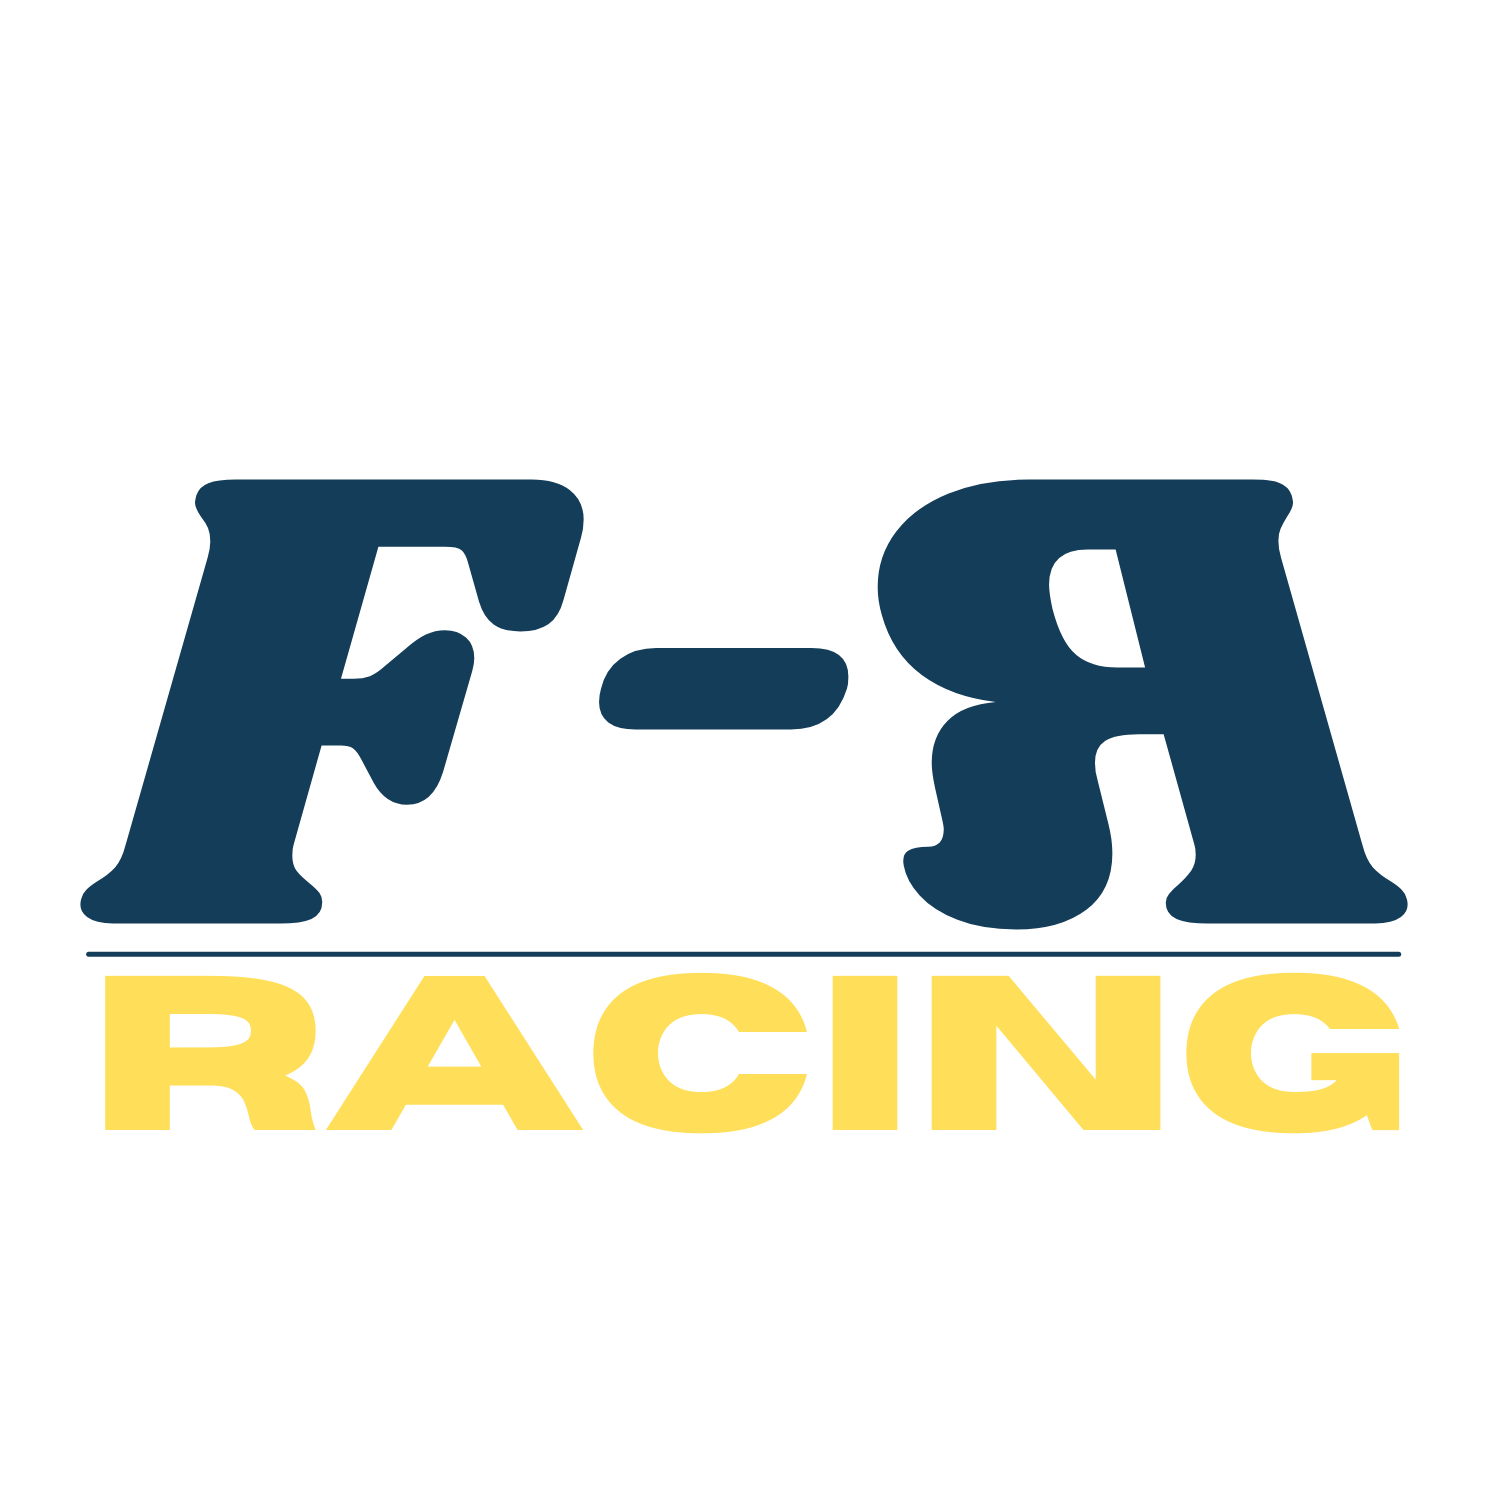 The Week in iRacing, Formula 1 Talk, Ryan Preece's Wreck, Motorsport Games Financials